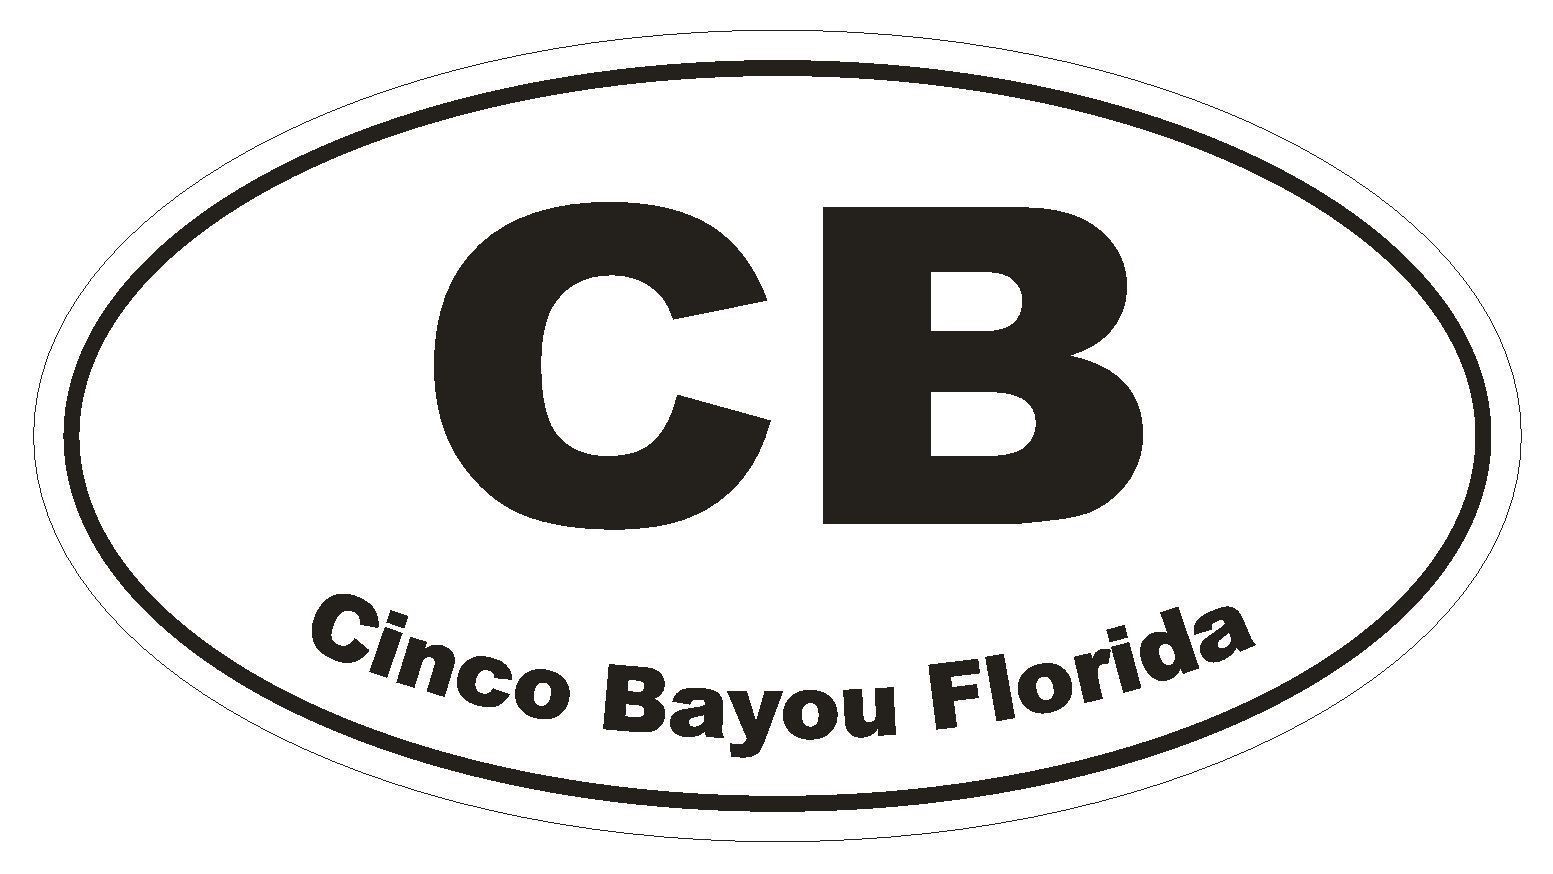 Cinco Bayou Florida Oval Bumper Sticker or Helmet Sticker D1636 Euro Oval - $1.39 - $75.00